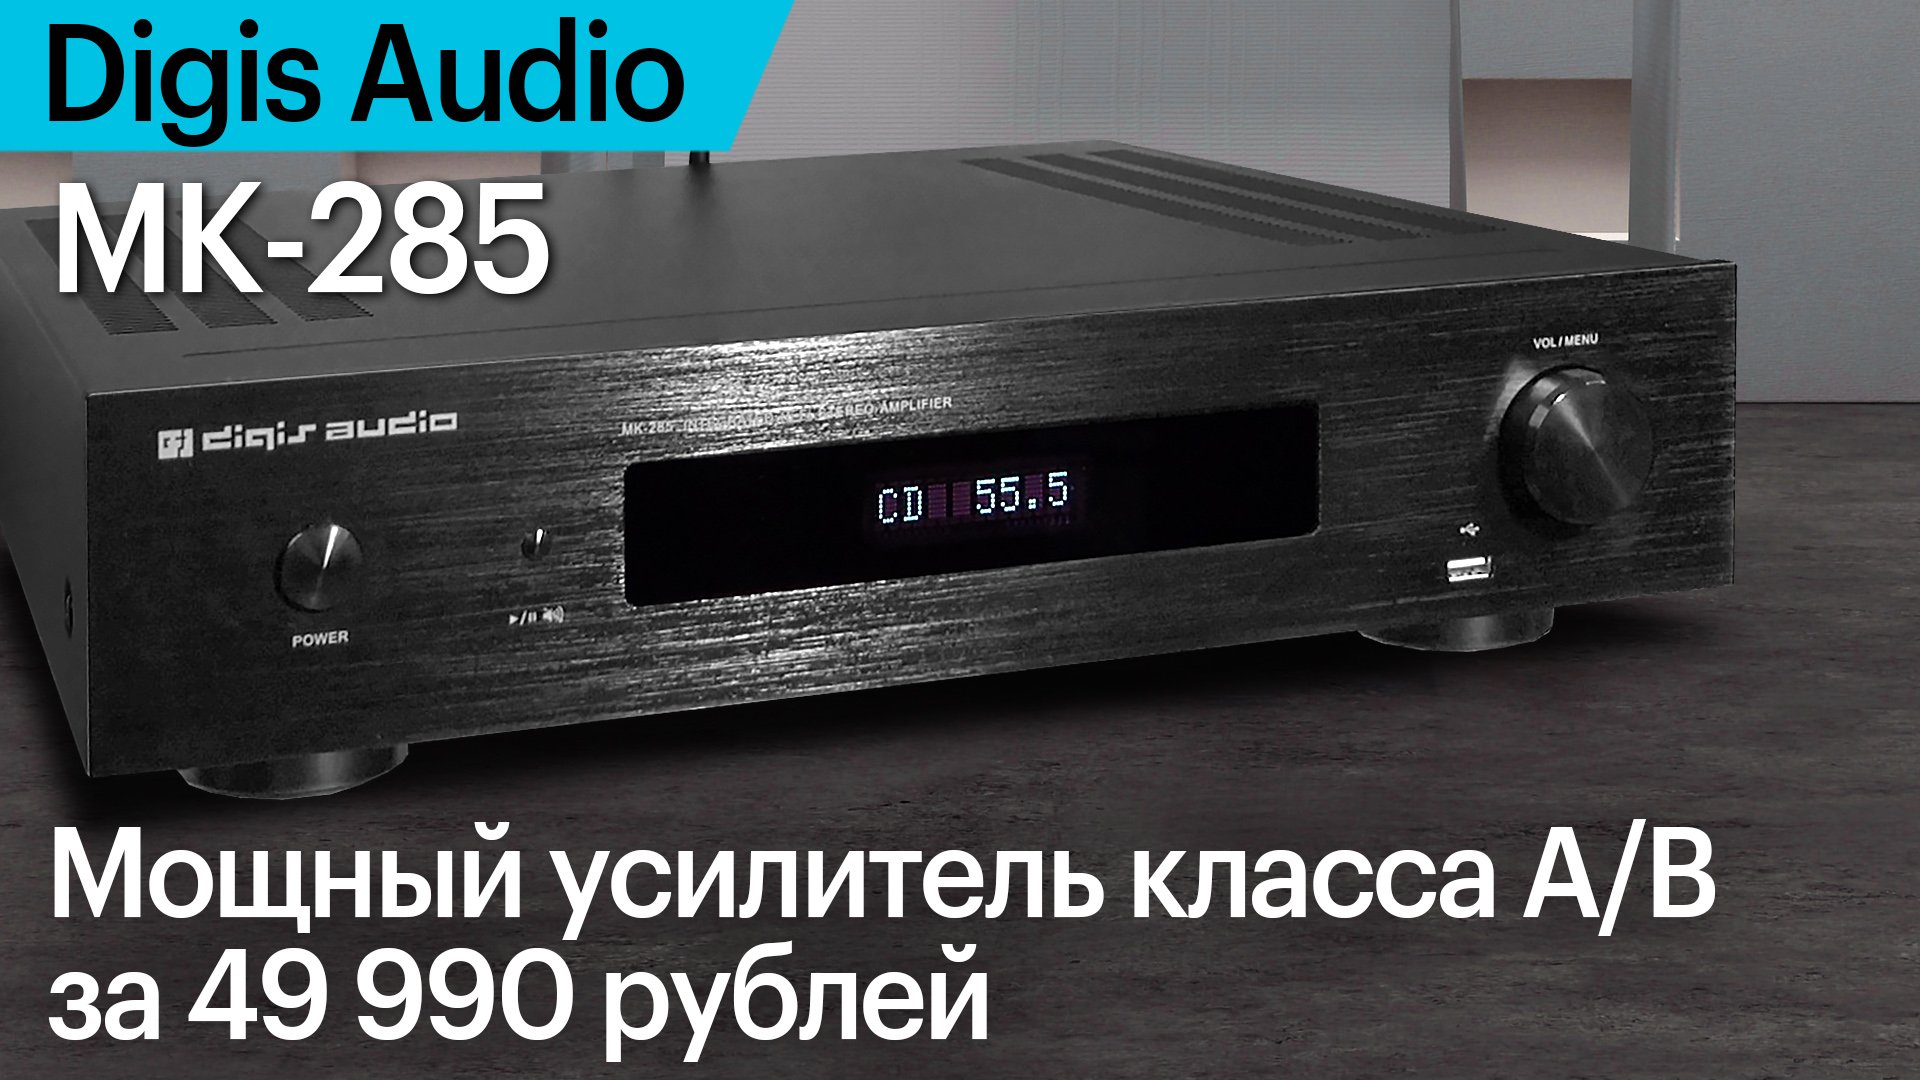 Digis audio. Digis Audio 285. Стереоусилитель Digis Audio MK-285. Вход аудио стерео. Digis Audio MK-285 обзор.